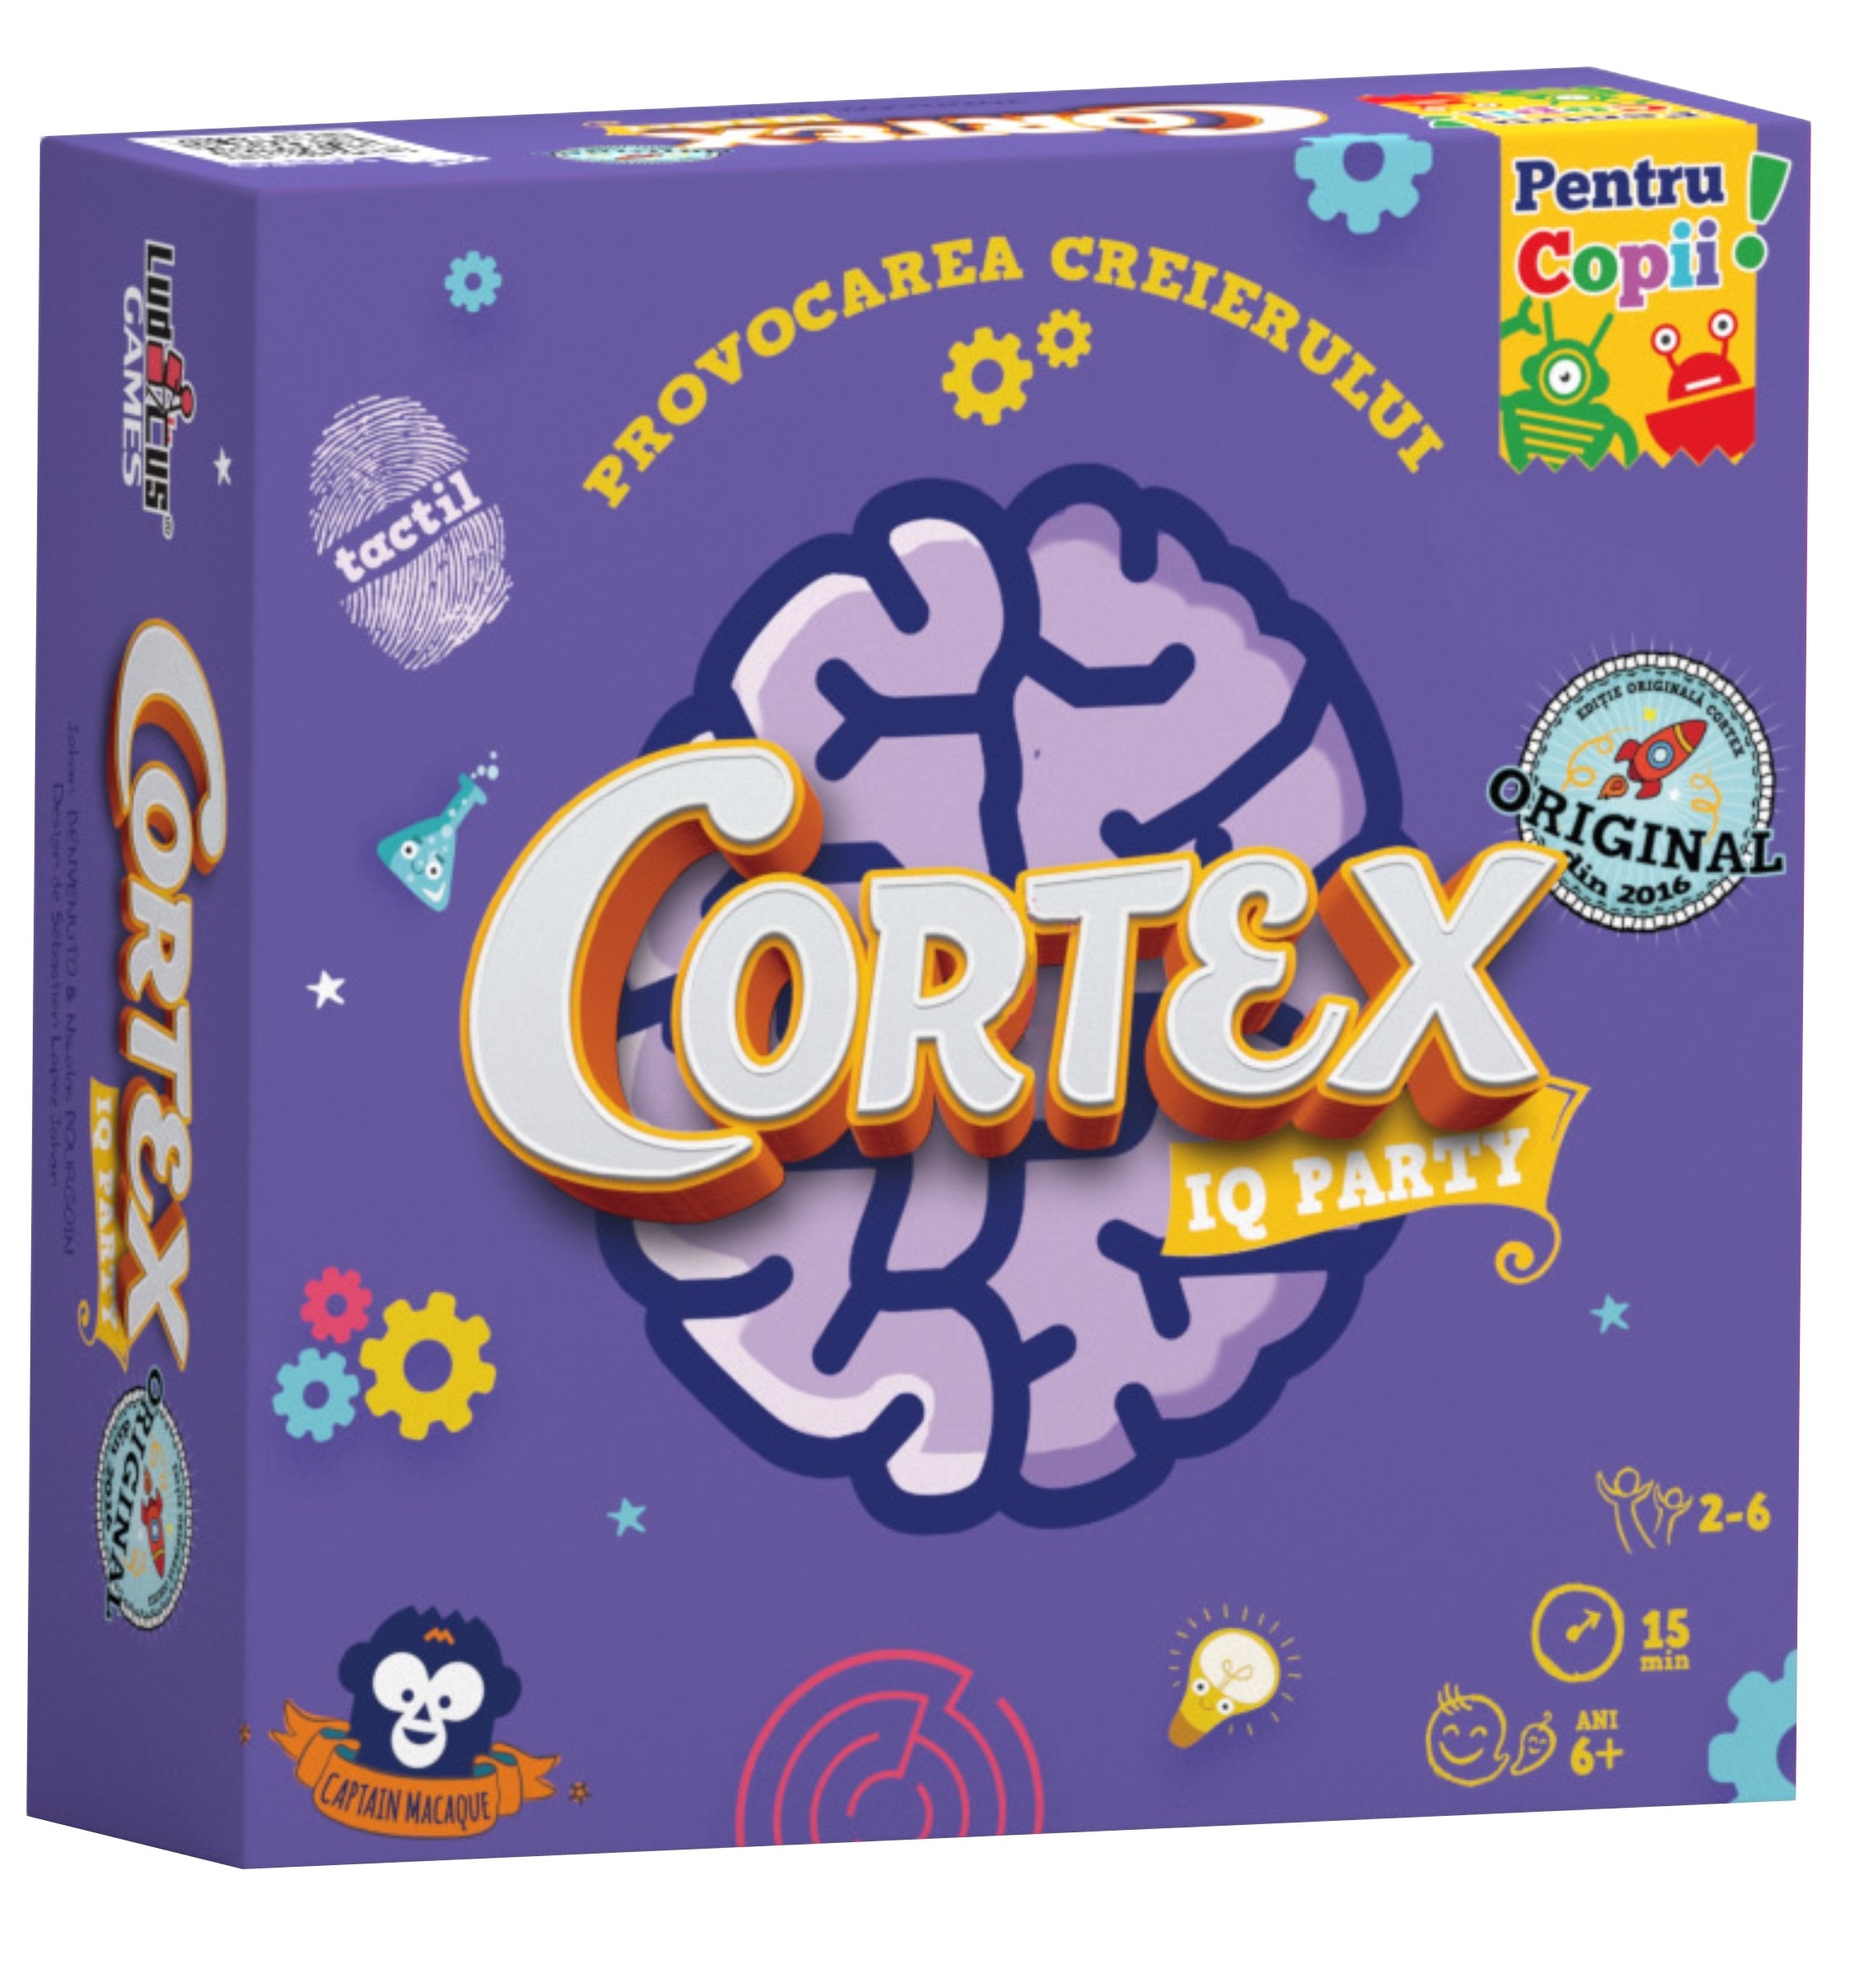 Cortex IQ Party: Kids